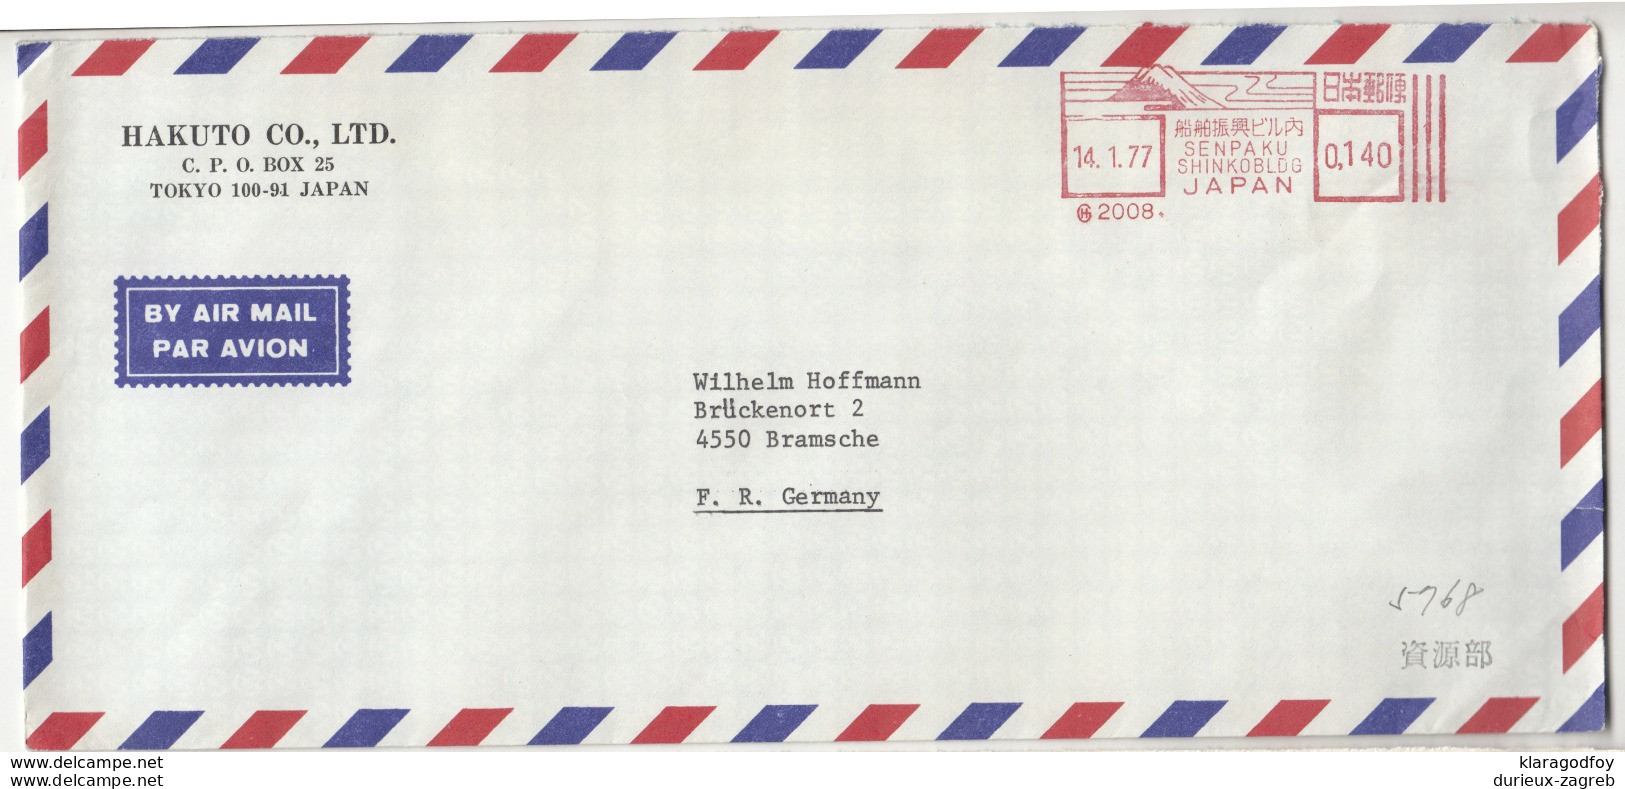 Hakuto Co., Tokyo Company Air Mail Letter Cover Travelled 1977 To Germany - Senpaku Shinkoblog Meter Stamp B190922 - Cartas & Documentos